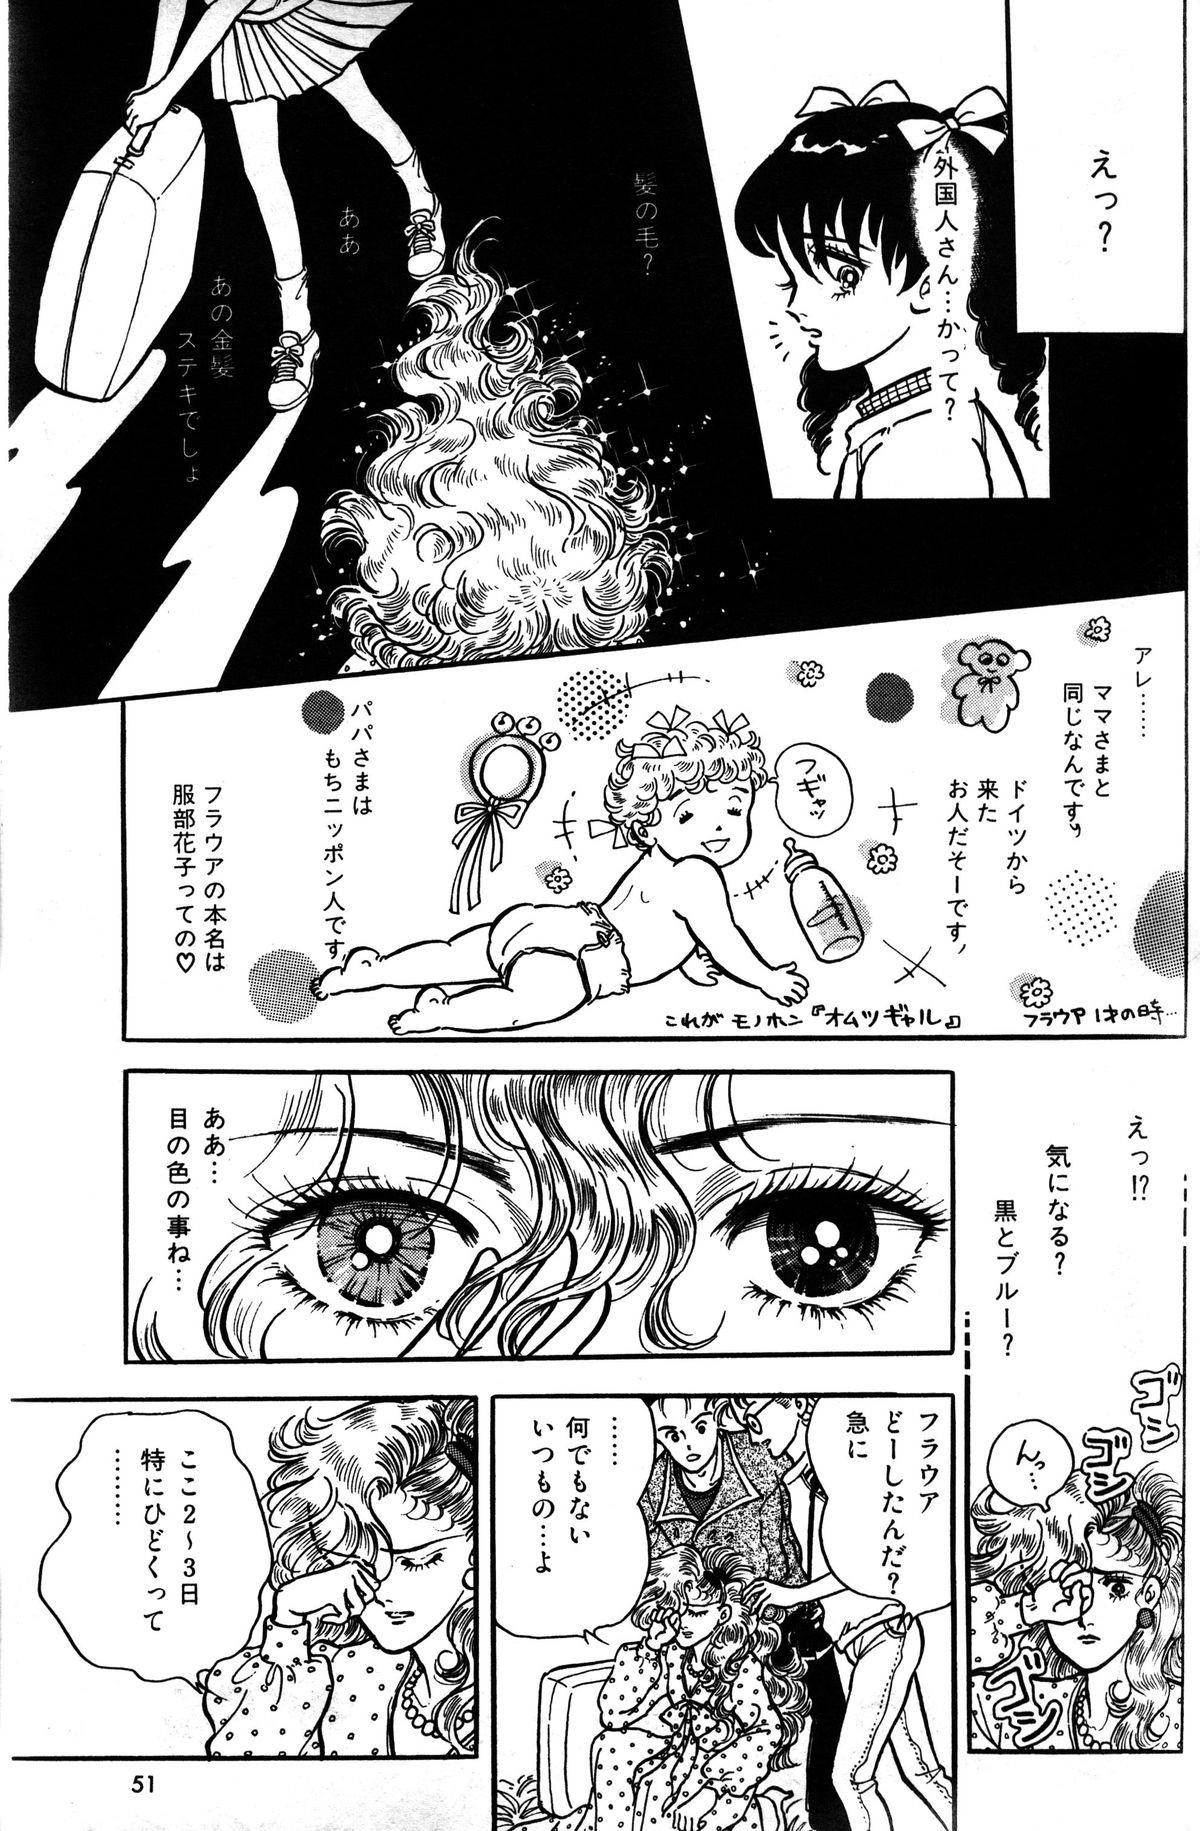 Melon Comic No. 01, メロンコミック 昭和59年6月号 52